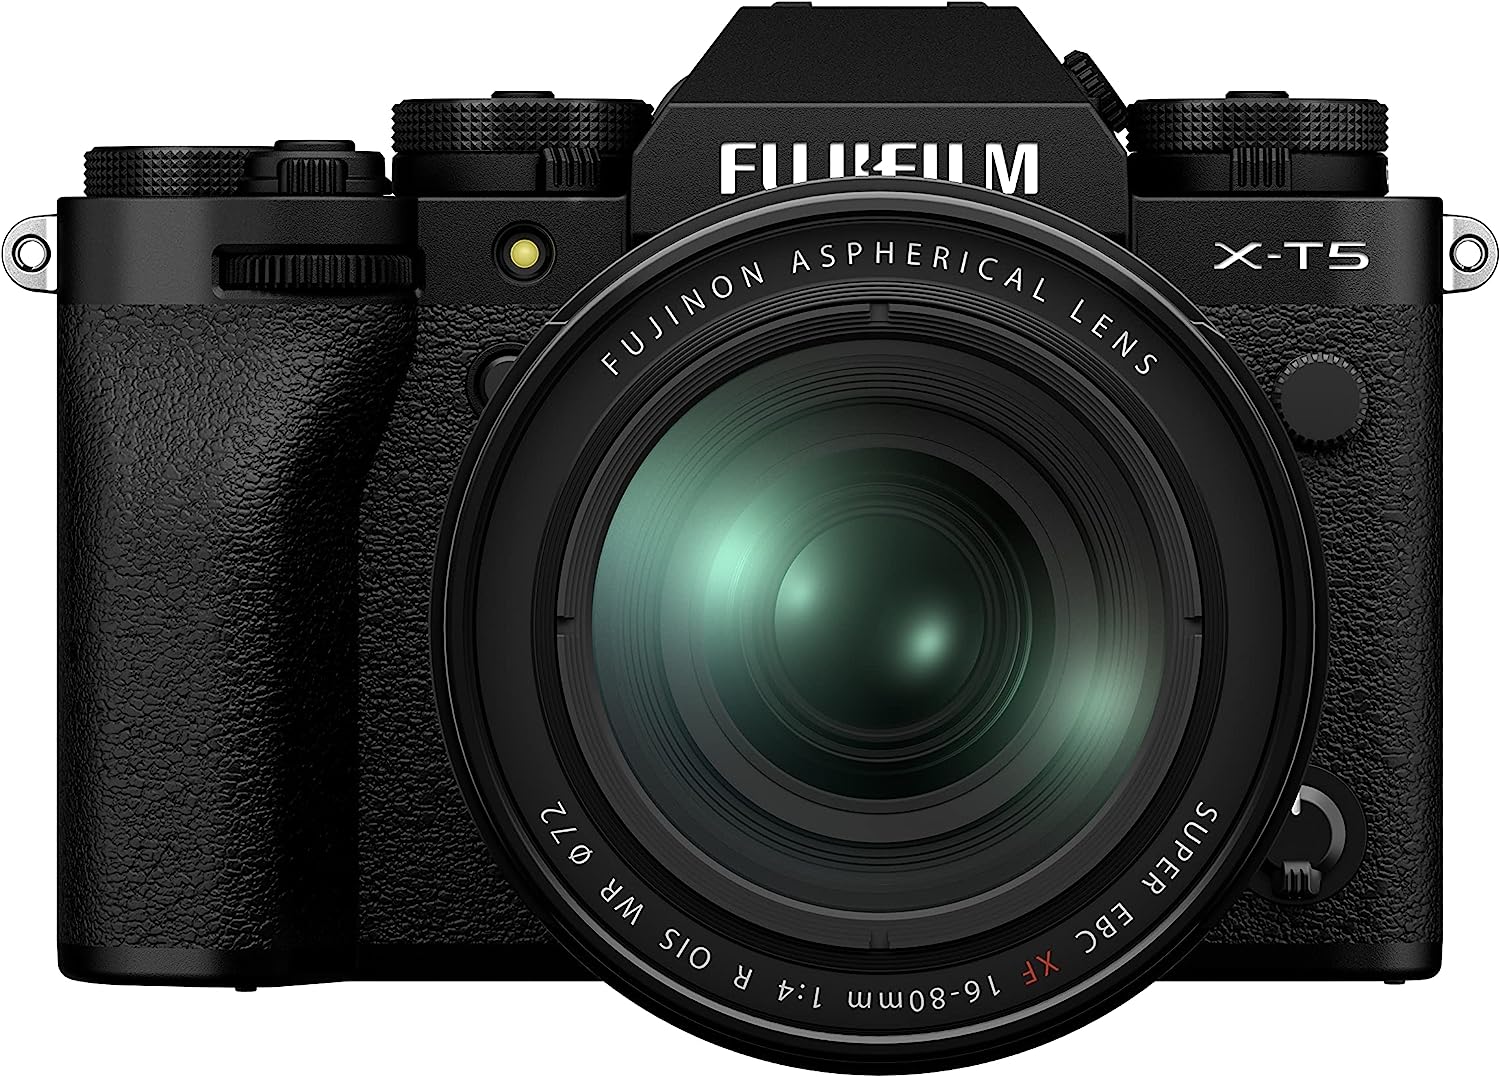 Fujifilm X-T5 Mirrorless Digital Camera XF16-80mm Lens Kit - Black - $1,699 at Amazon